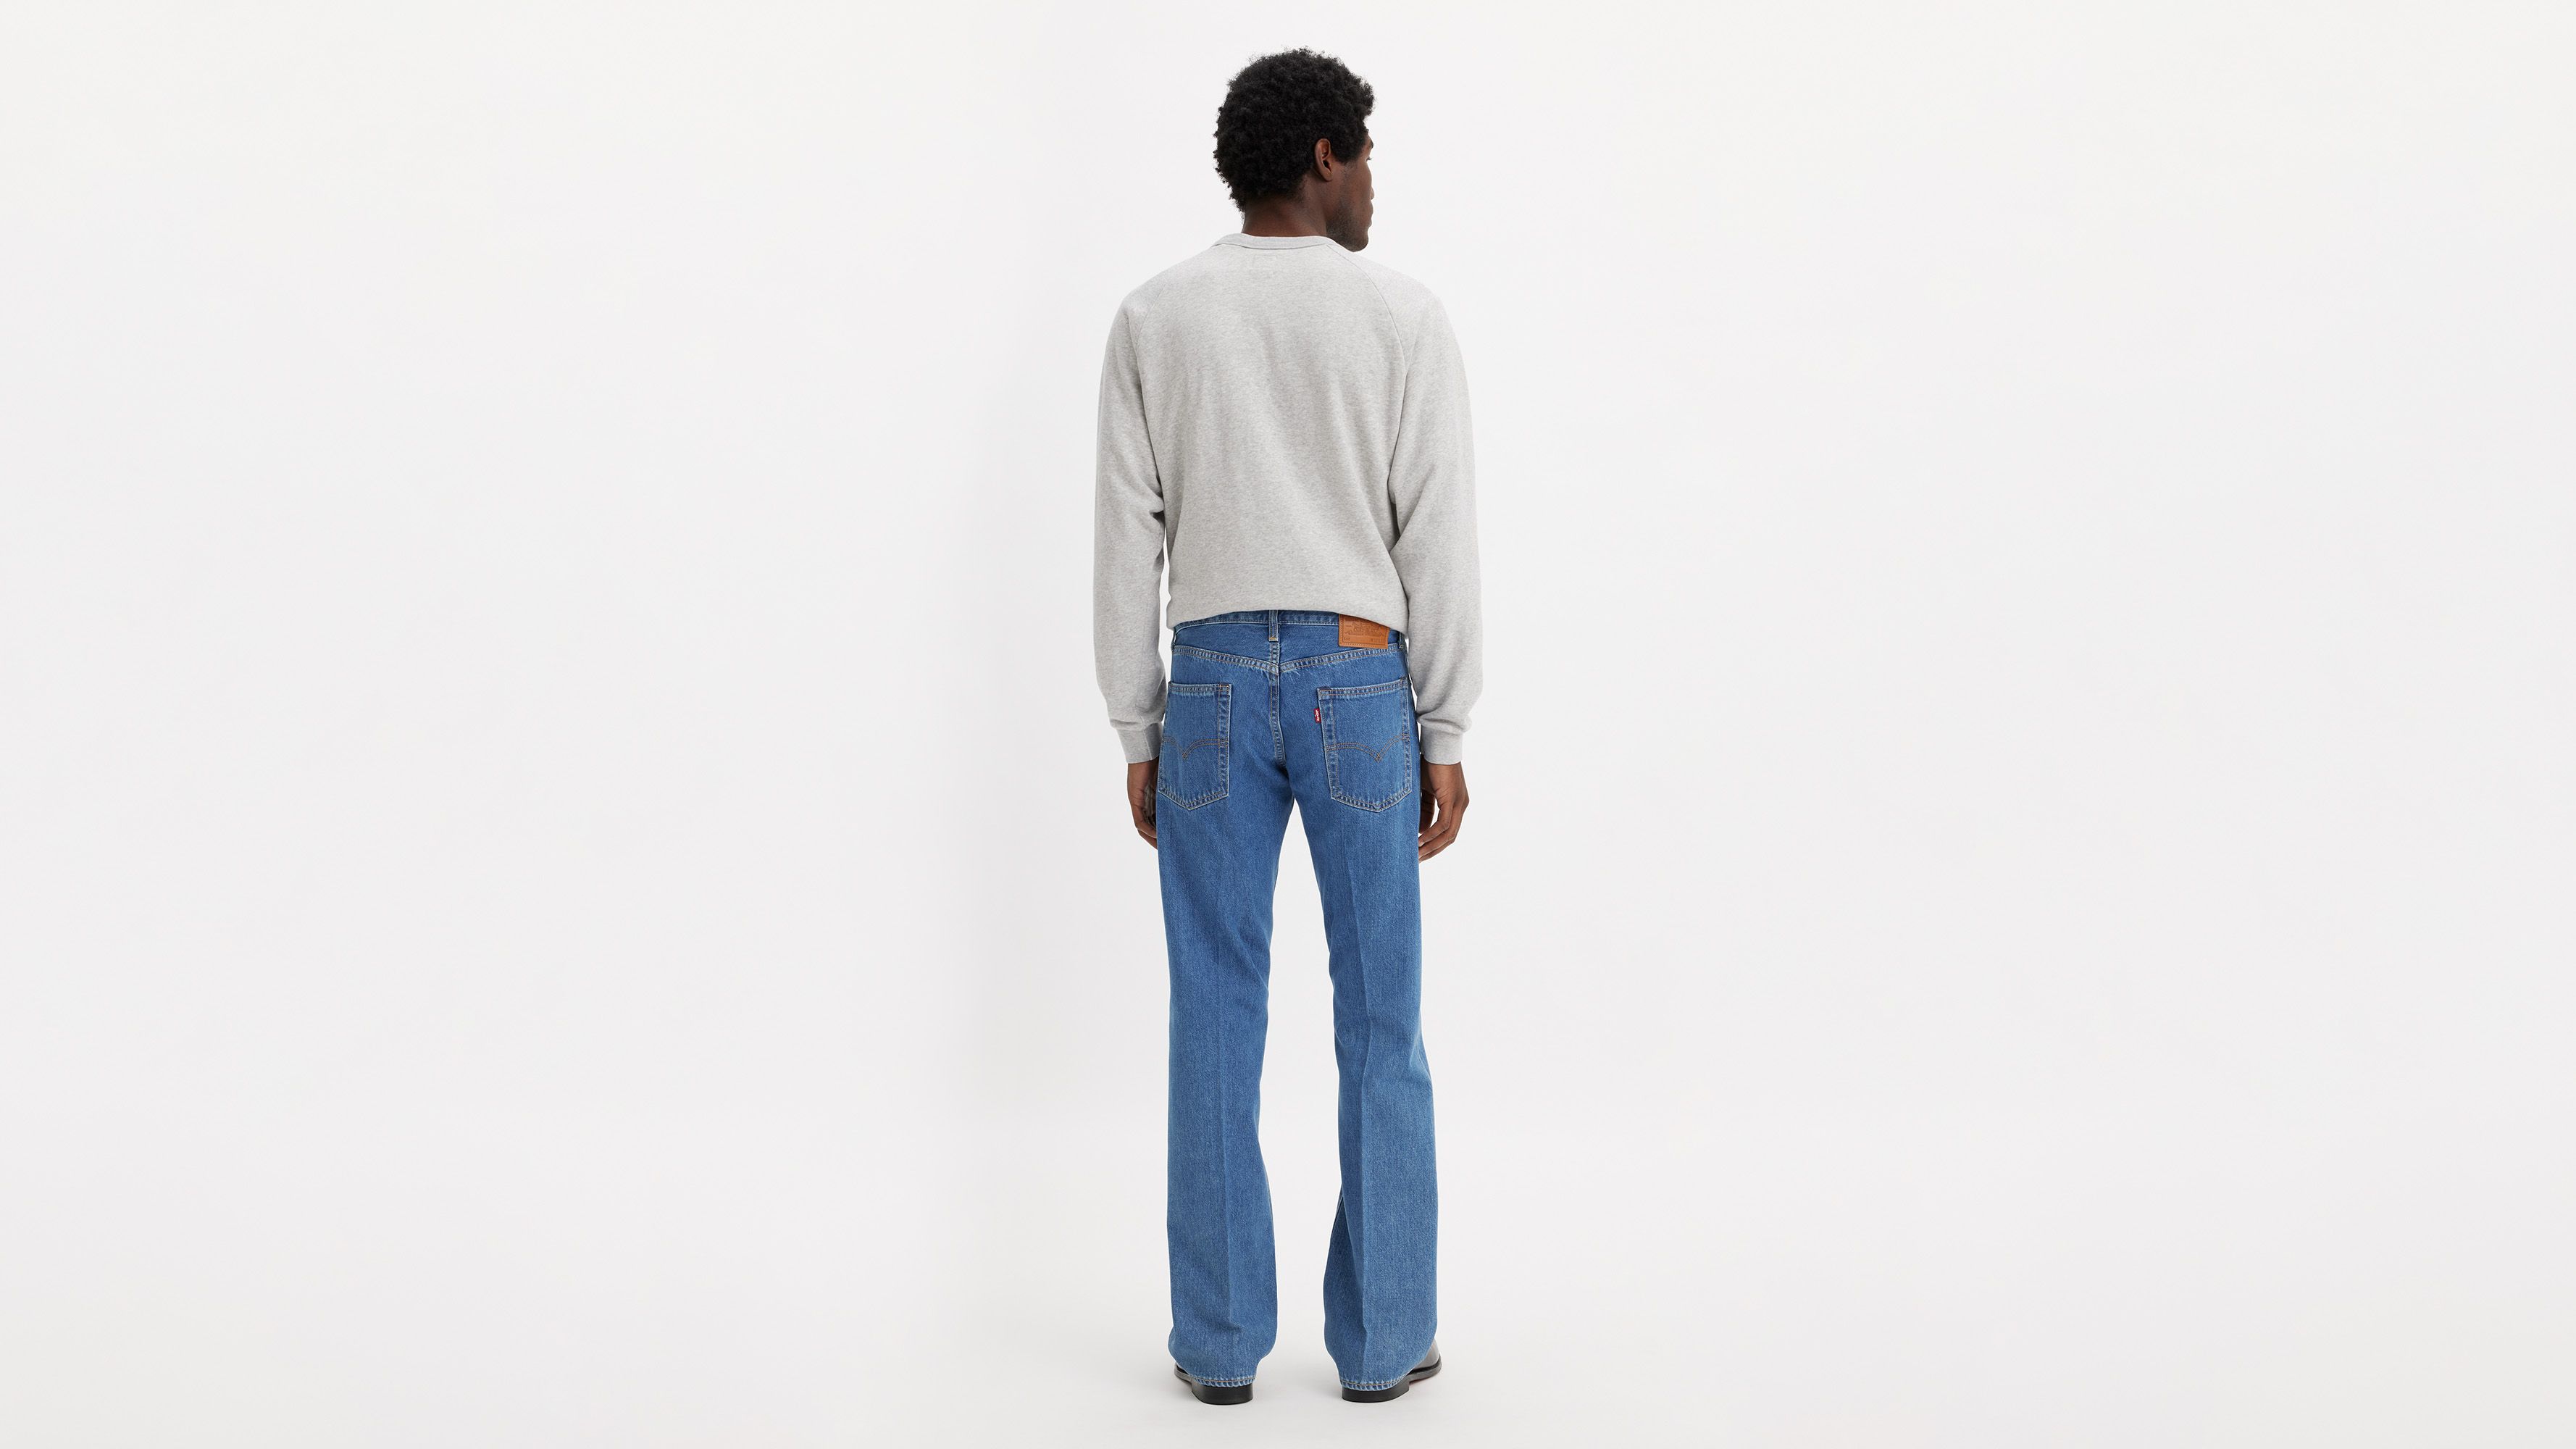 517™ Bootcut Jeans - Blue | Levi's® GB